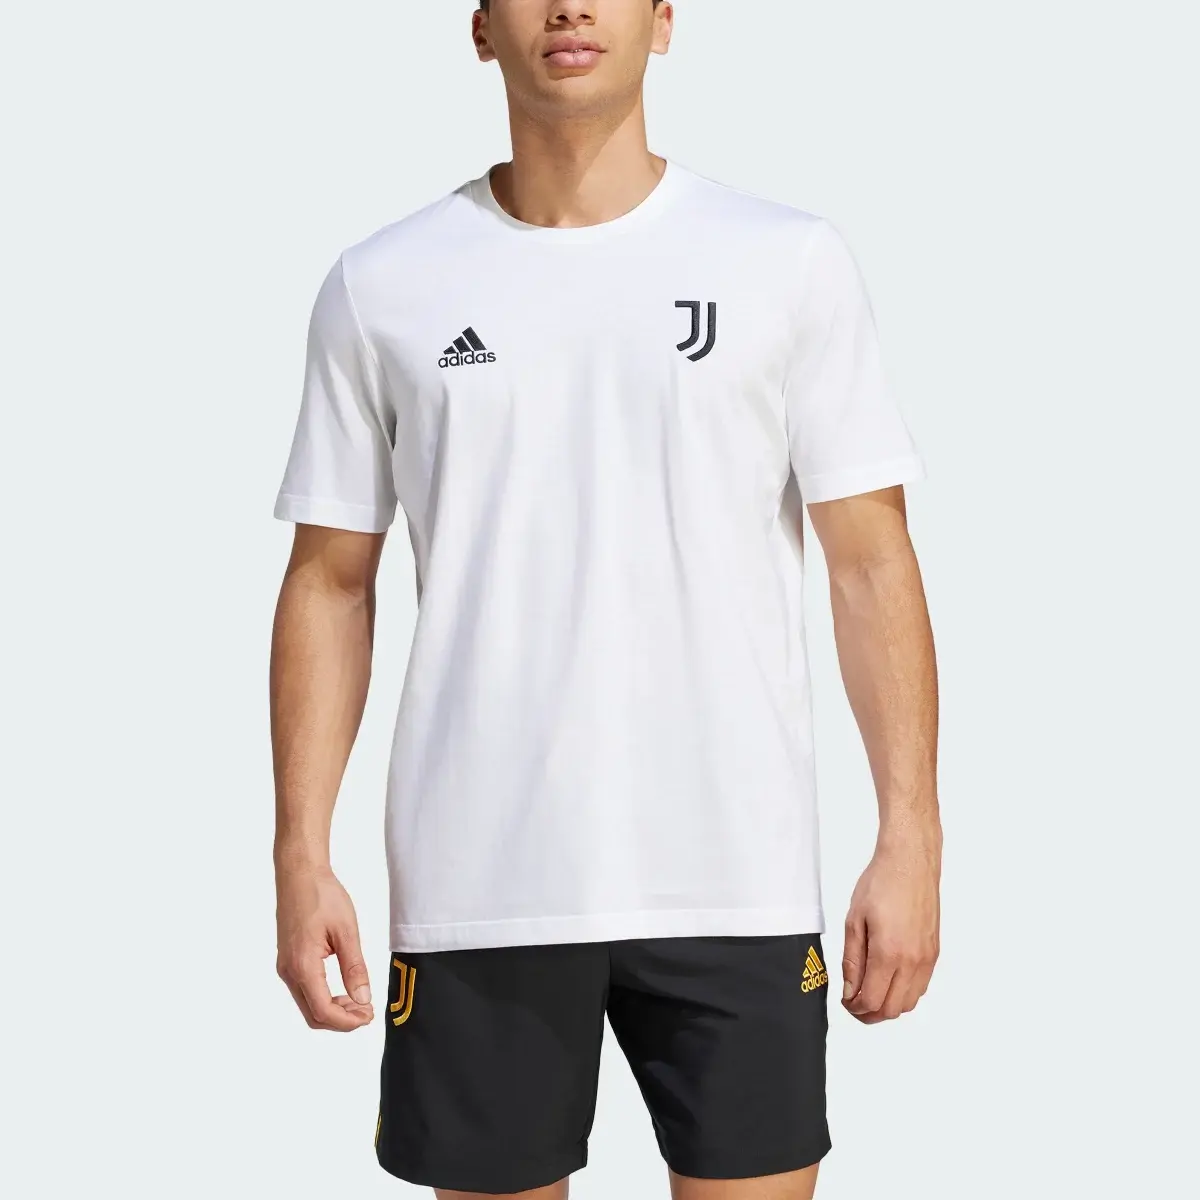 Adidas T-shirt Juventus DNA. 1